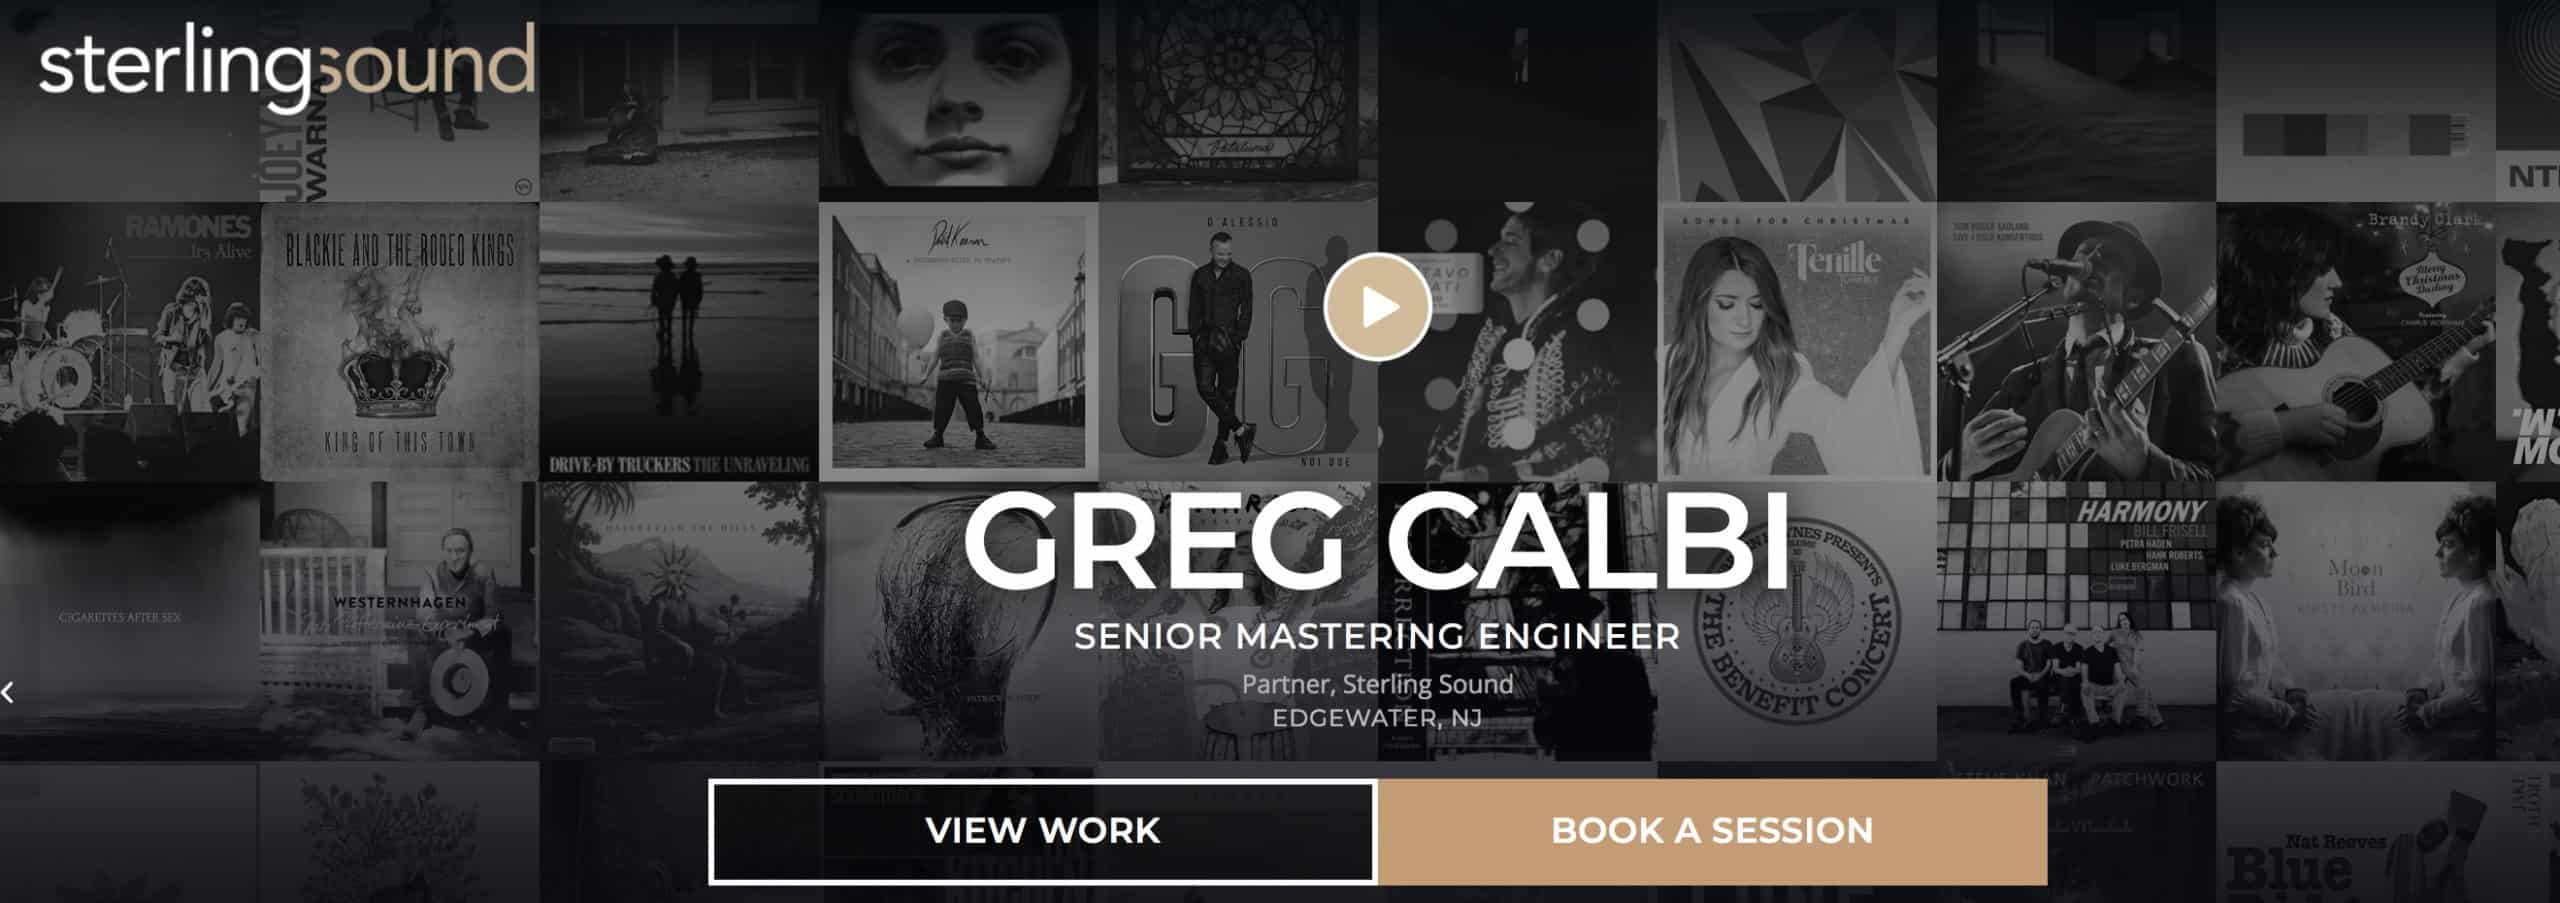 Greg Calbi’s mastering header